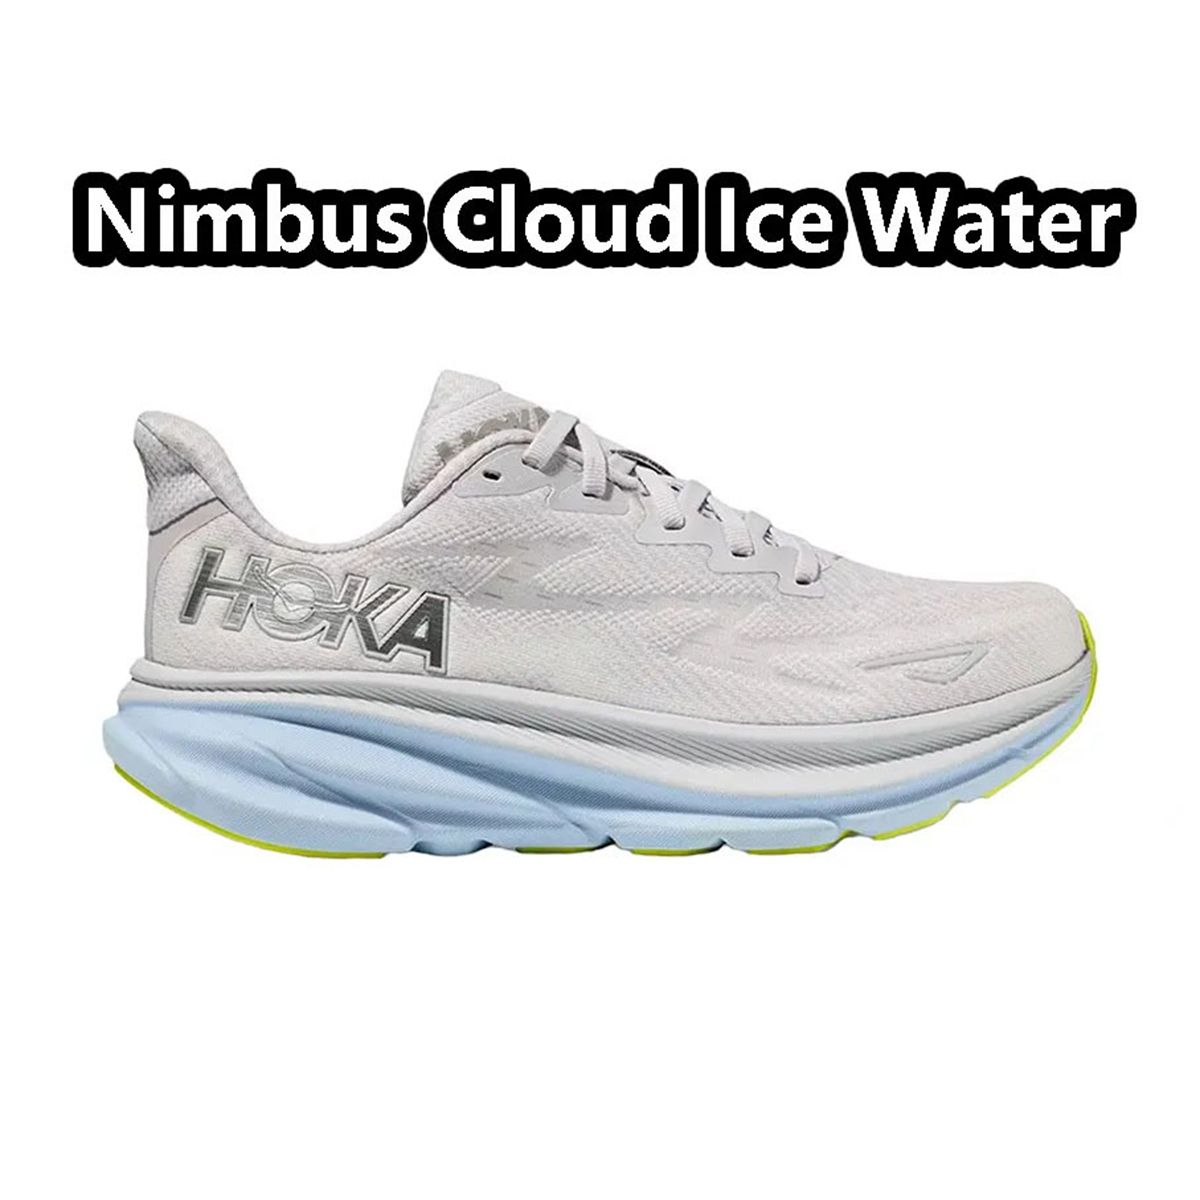 Nimbus Cloud Ice Water